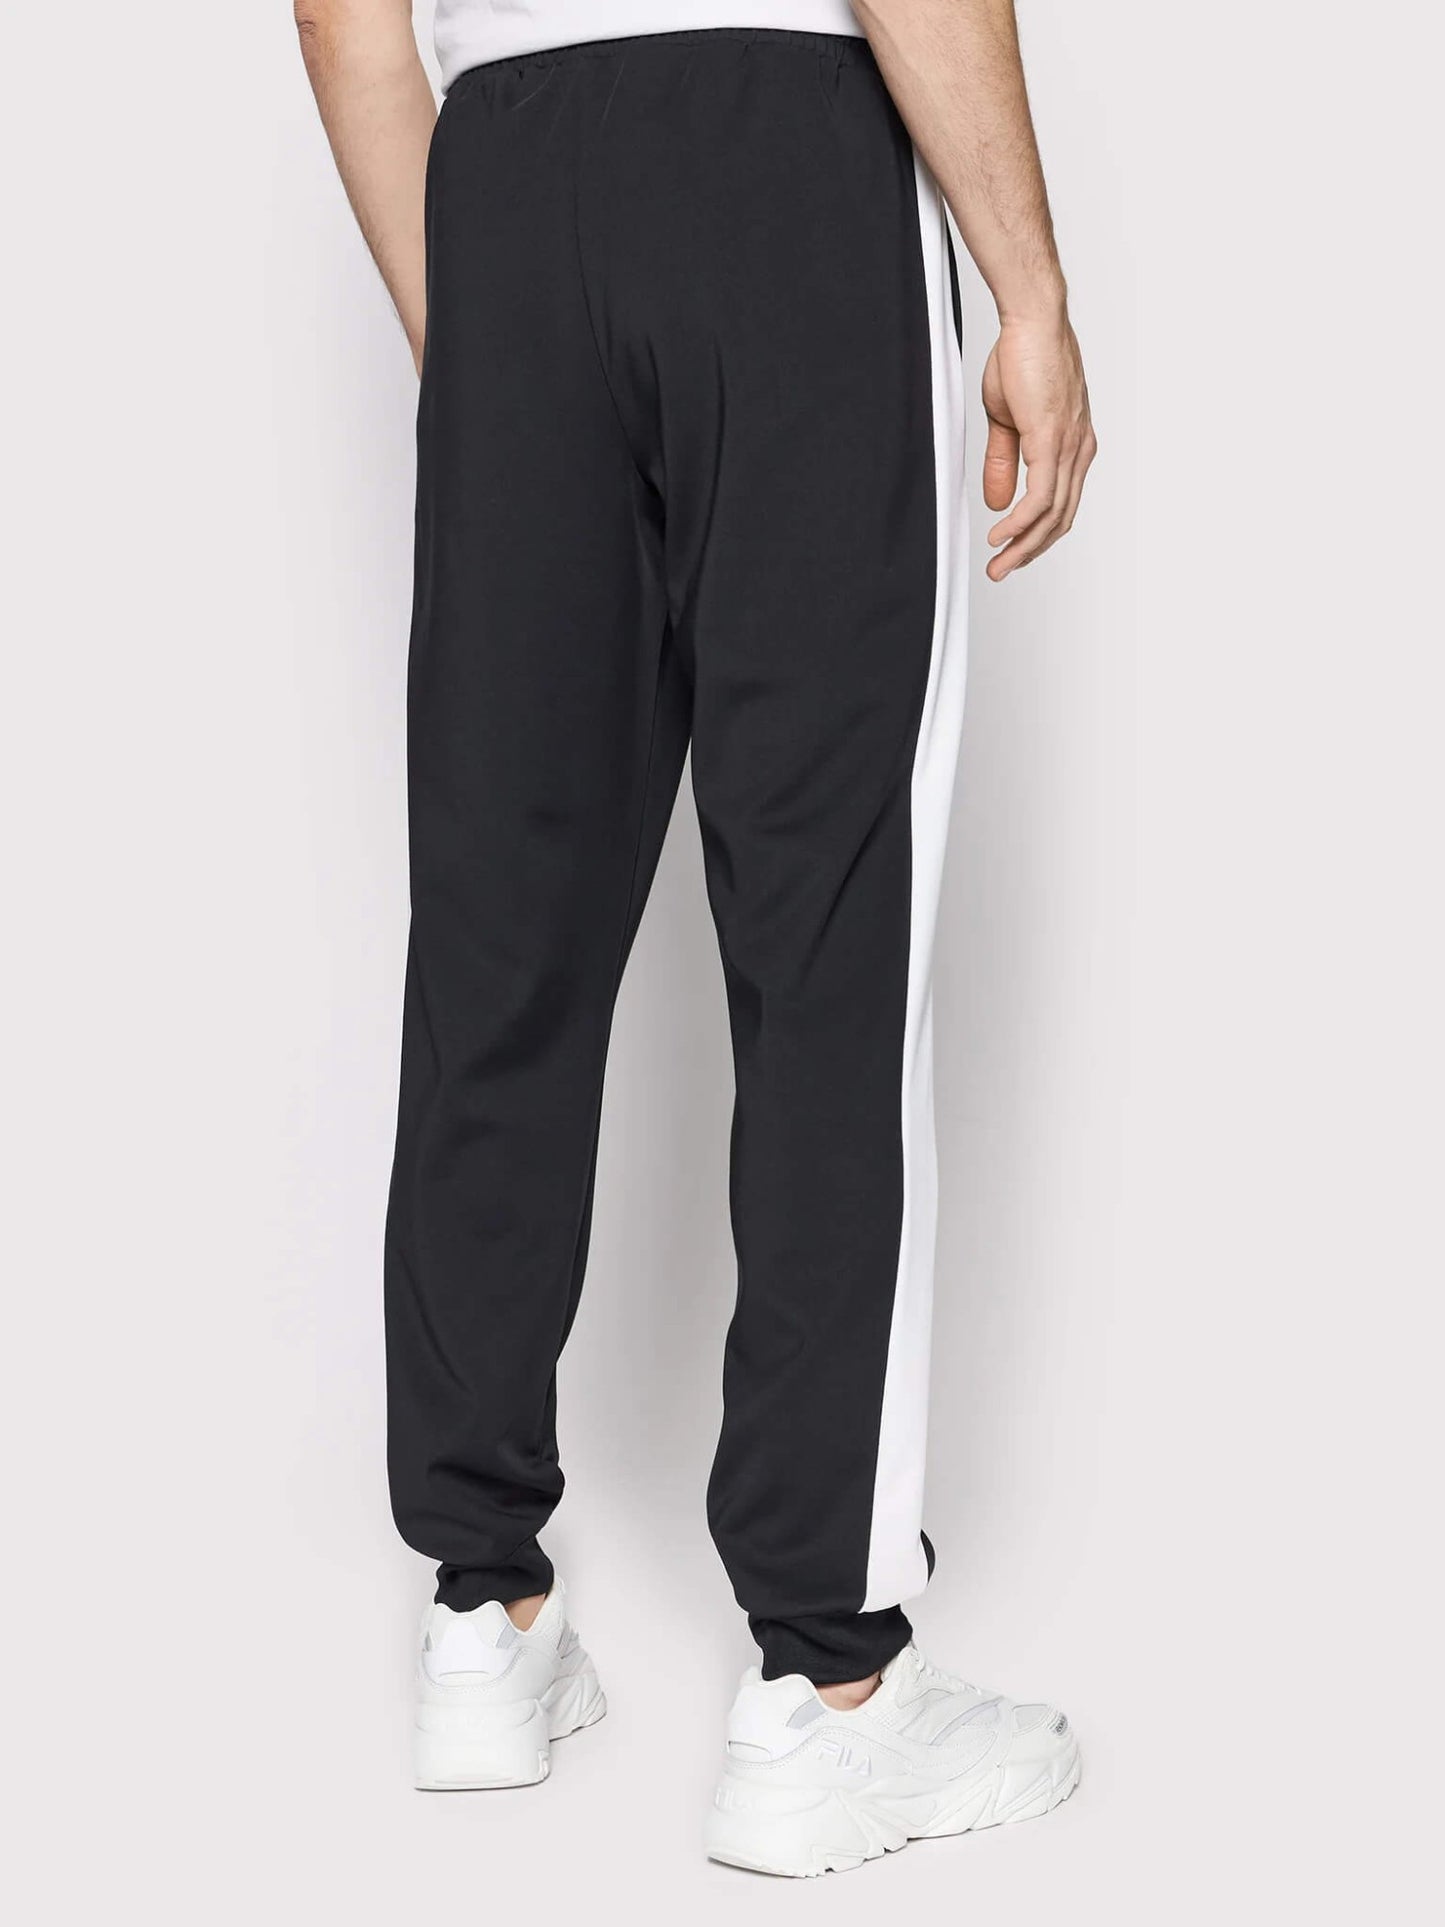 FILA REMOND track pants black-bright white